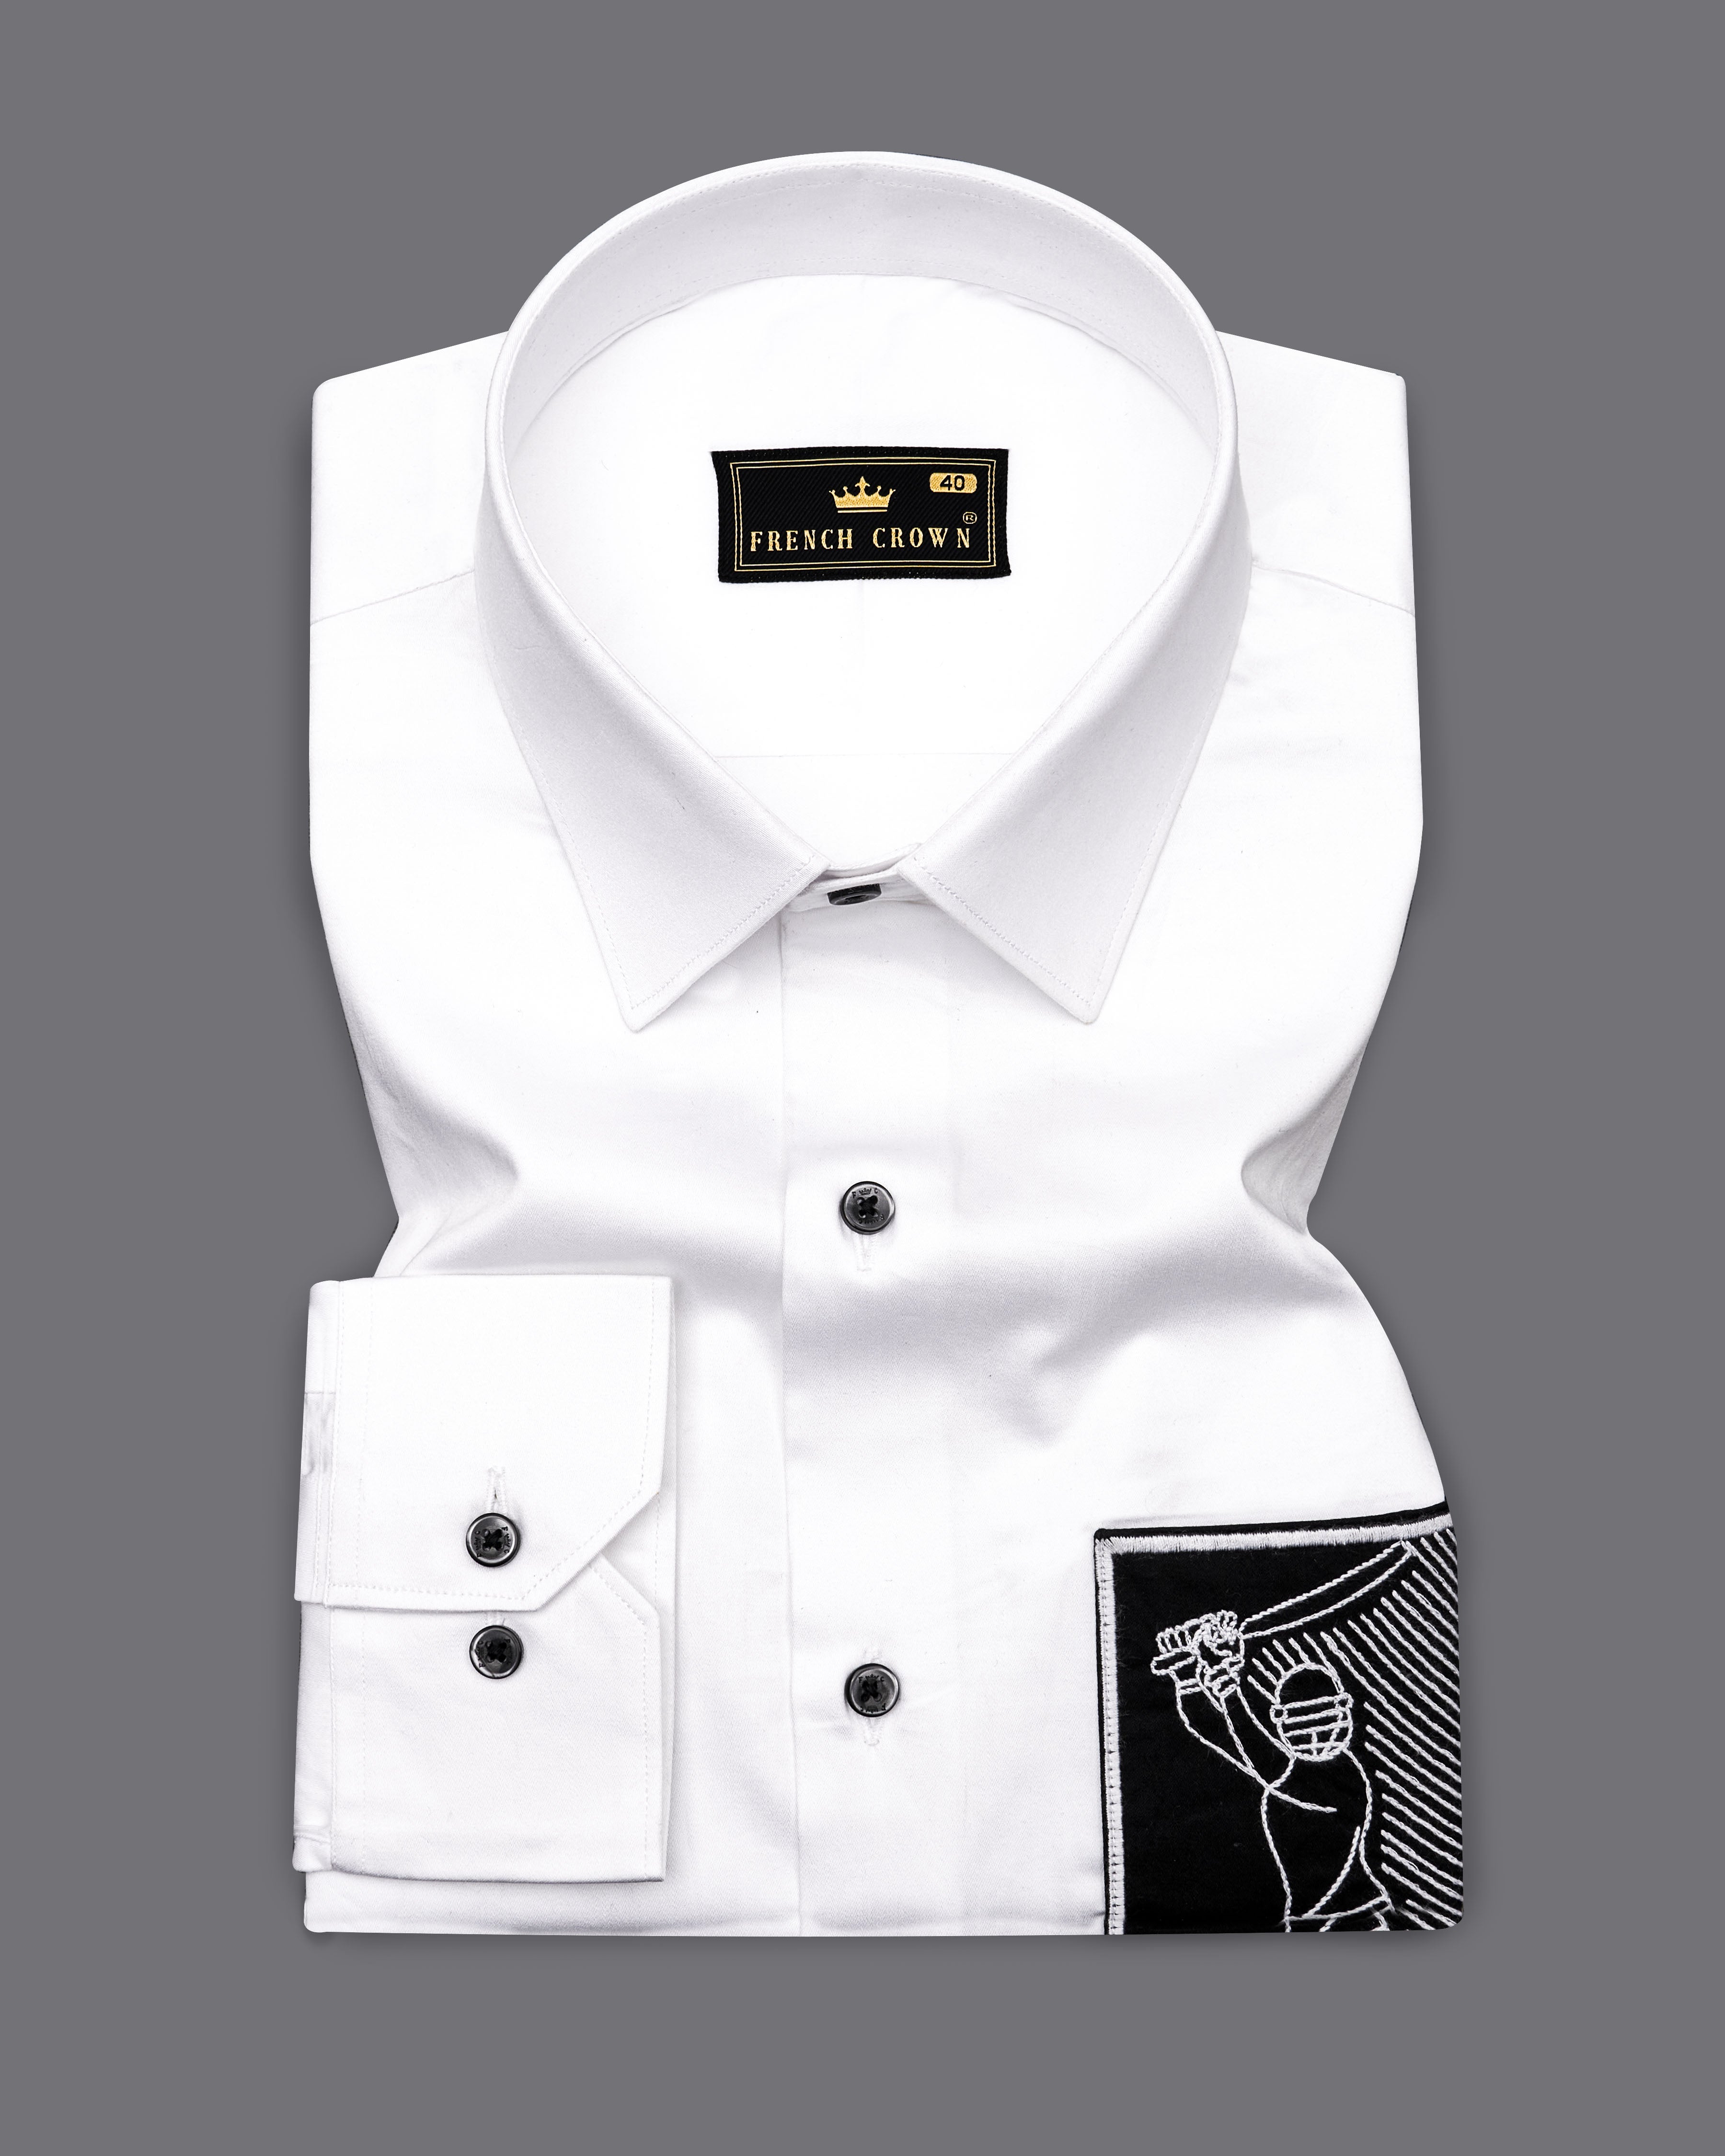 Bright White Subtle Sheen with Black Cricketer Embroidered Work Super Soft Premium cotton Shirt 1062-BLK-E052-38,1062-BLK-E052-H-38,1062-BLK-E052-39,1062-BLK-E052-H-39,1062-BLK-E052-40,1062-BLK-E052-H-40,1062-BLK-E052-42,1062-BLK-E052-H-42,1062-BLK-E052-44,1062-BLK-E052-H-44,1062-BLK-E052-46,1062-BLK-E052-H-46,1062-BLK-E052-48,1062-BLK-E052-H-48,1062-BLK-E052-50,1062-BLK-E052-H-50,1062-BLK-E052-52,1062-BLK-E052-H-52